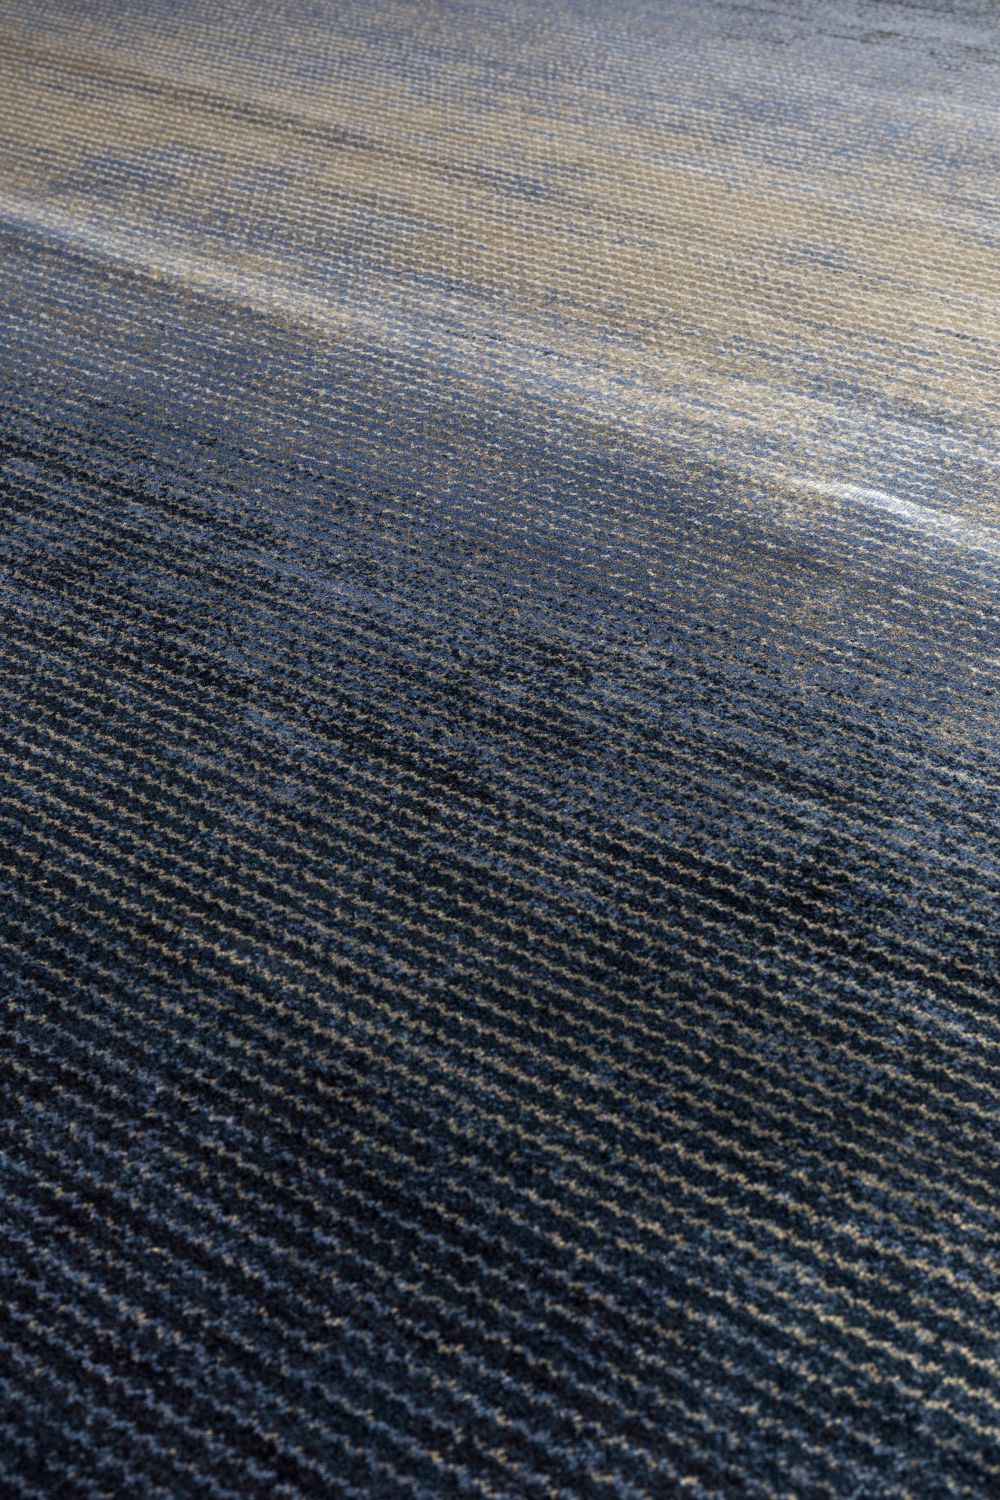  Zuiver-Zuiver Obi Carpet 170X240 Blue-Blue  77 